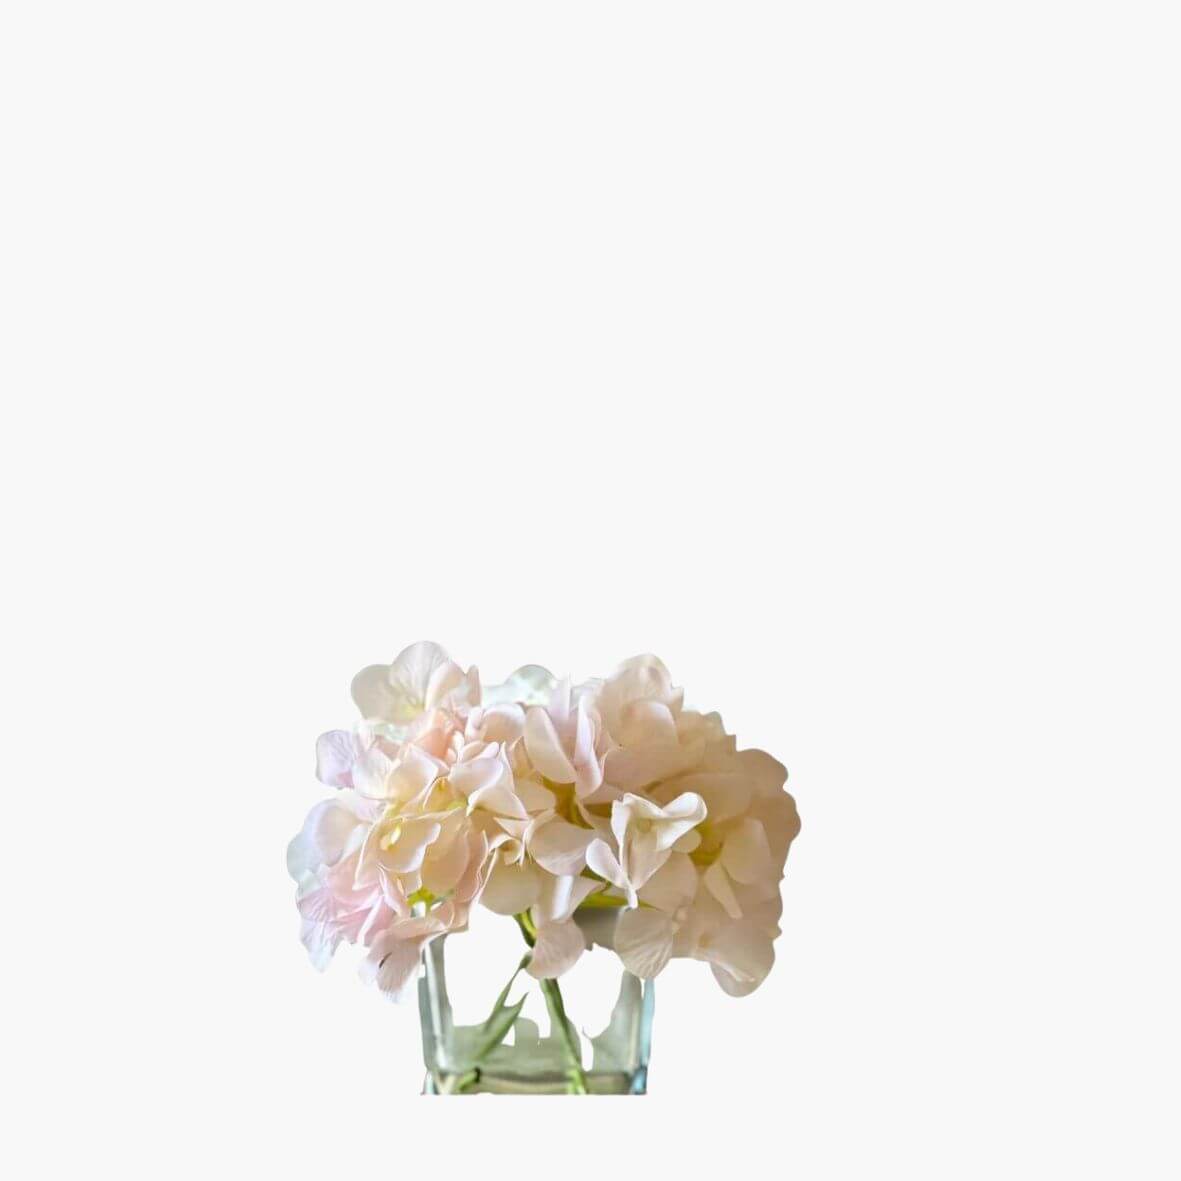 Faux blush Hydrangea arrangement in cubed glass vase on white background